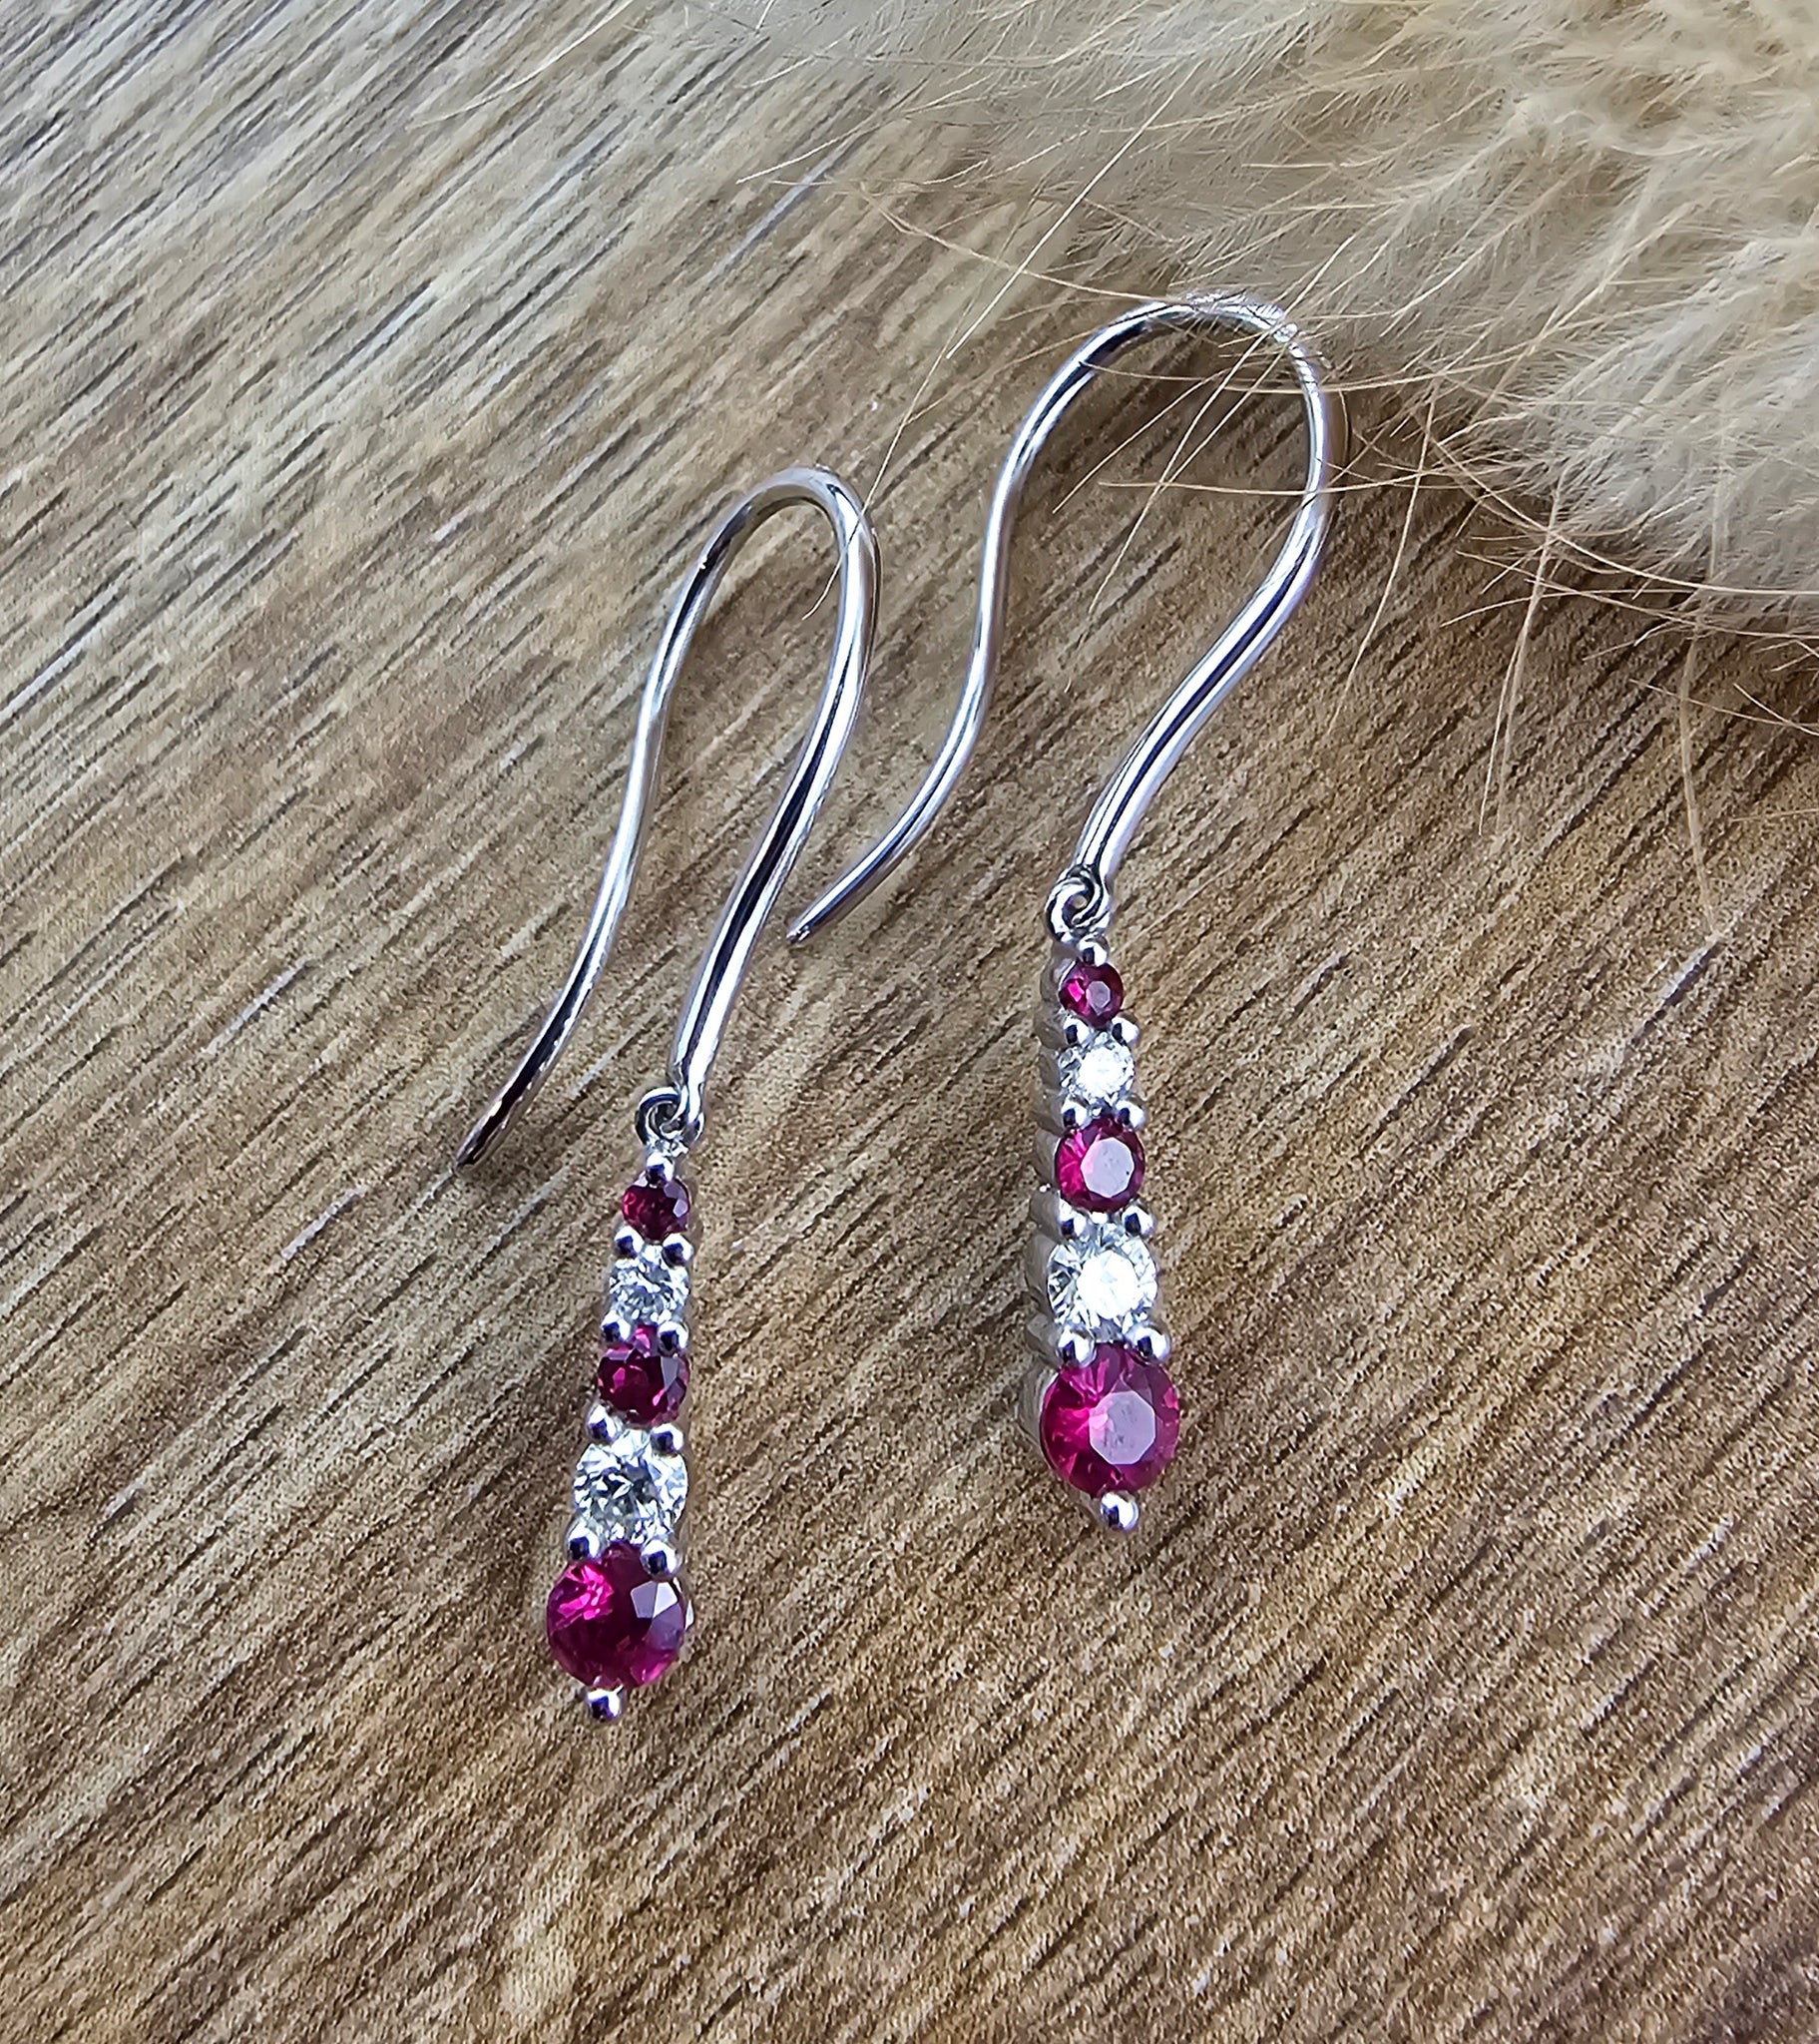 Ruby and diamond drop earrings